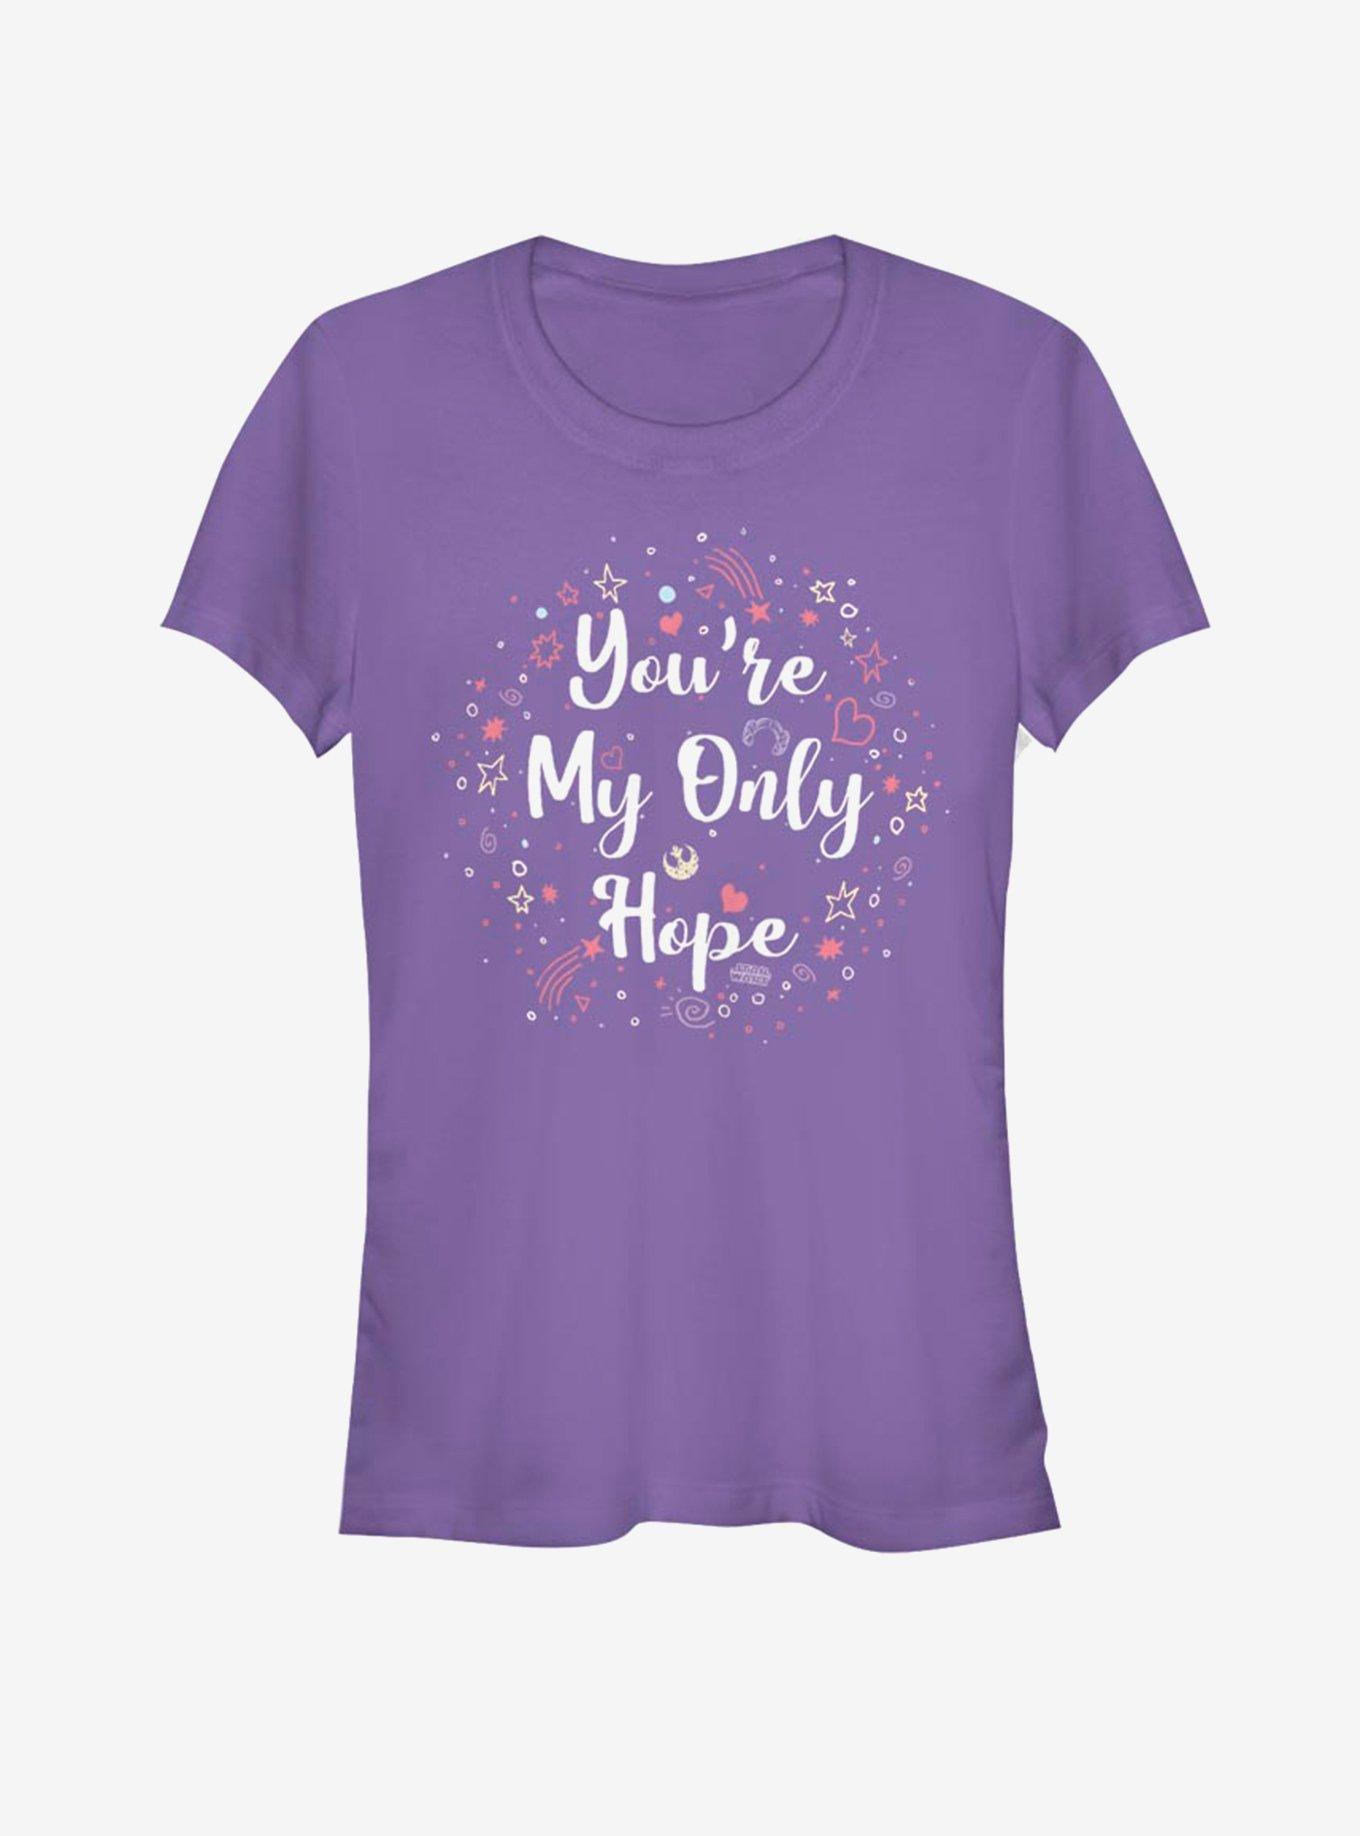 Star Wars Only Hope Girls T-Shirt, PURPLE, hi-res